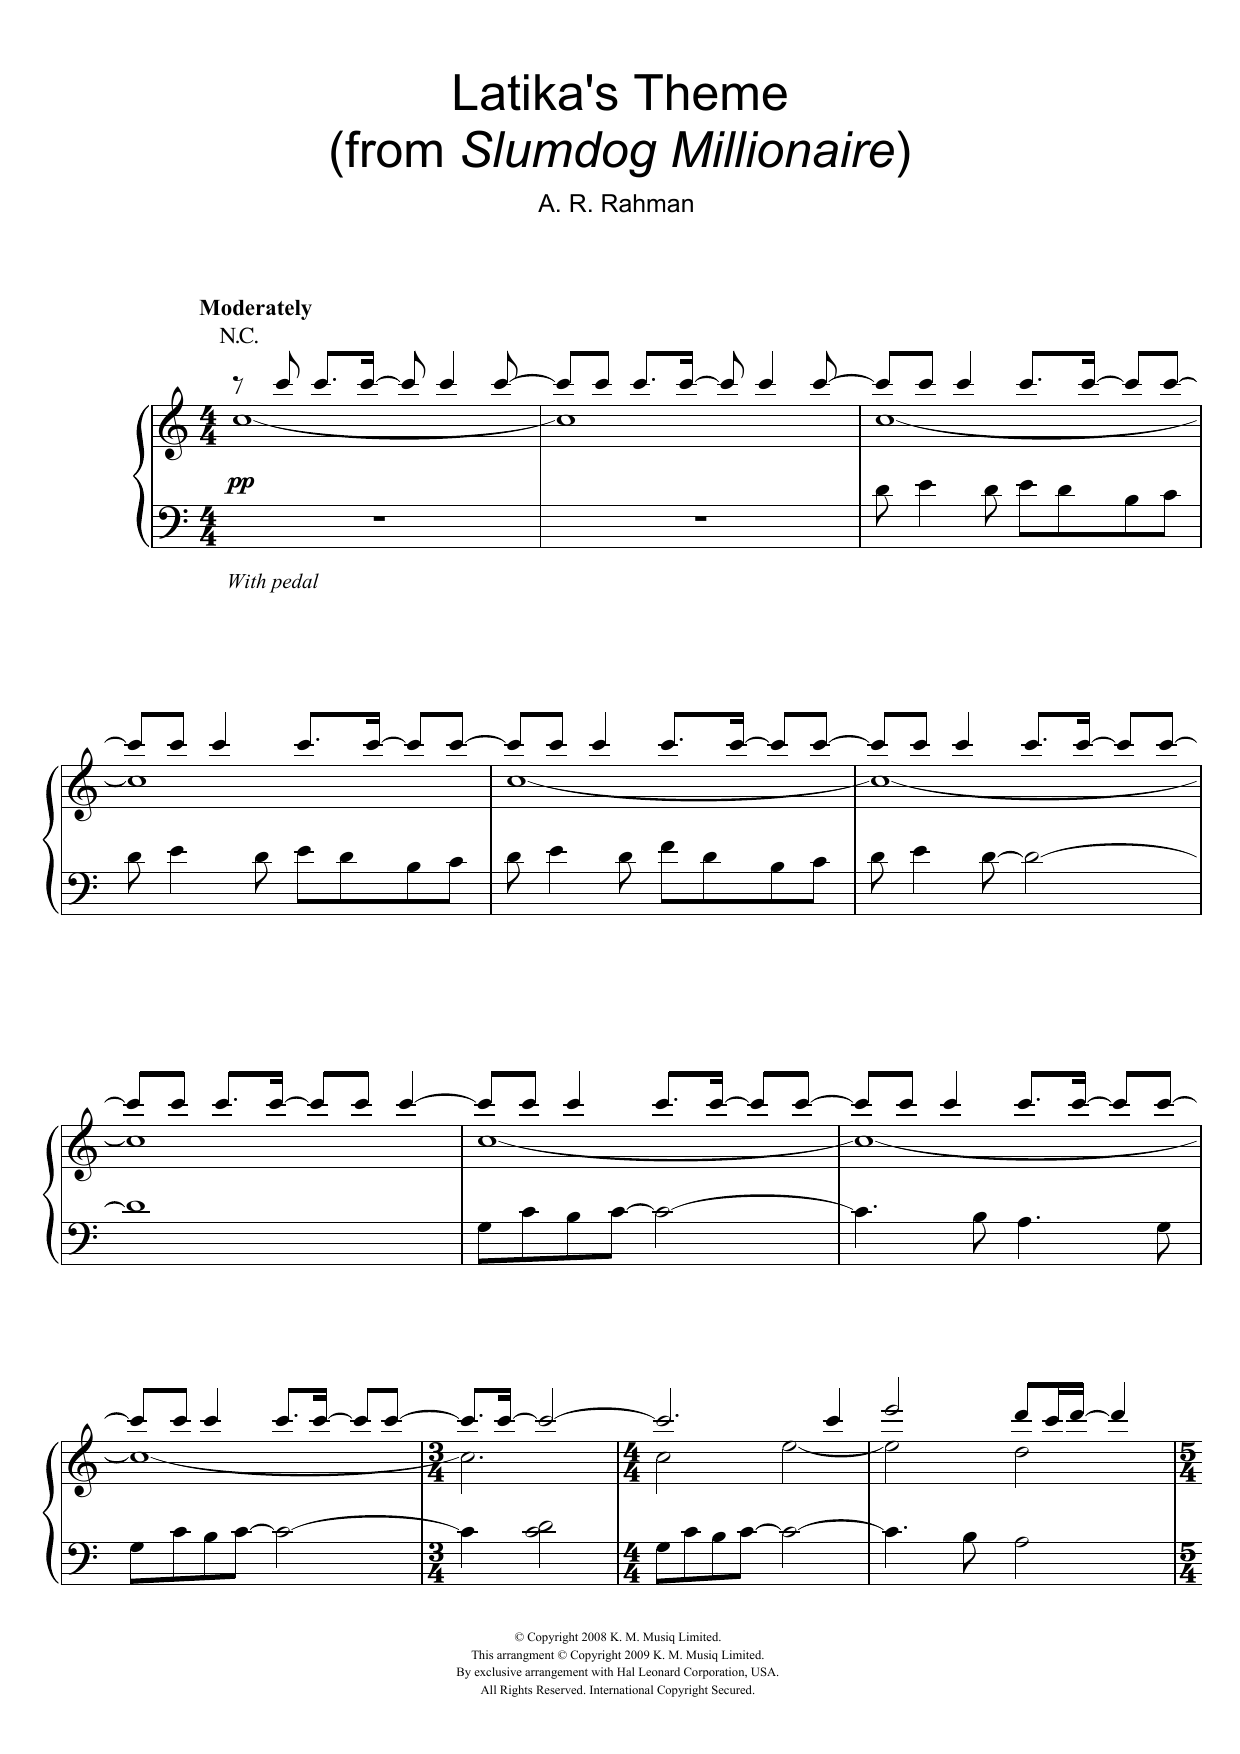 A. R. Rahman Latika's Theme (from Slumdog Millionaire) Sheet Music Notes & Chords for Piano - Download or Print PDF